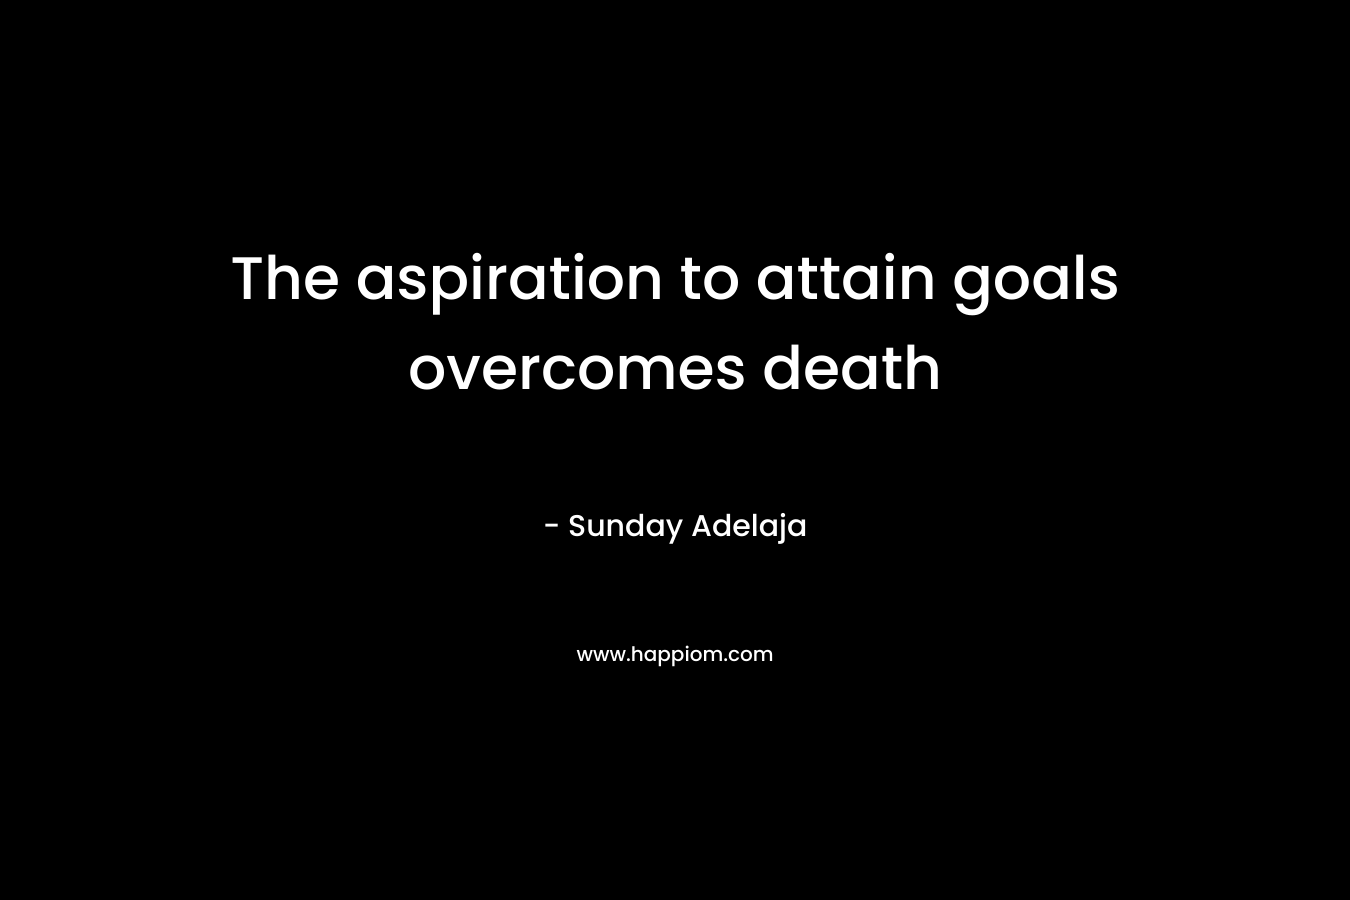 The aspiration to attain goals overcomes death